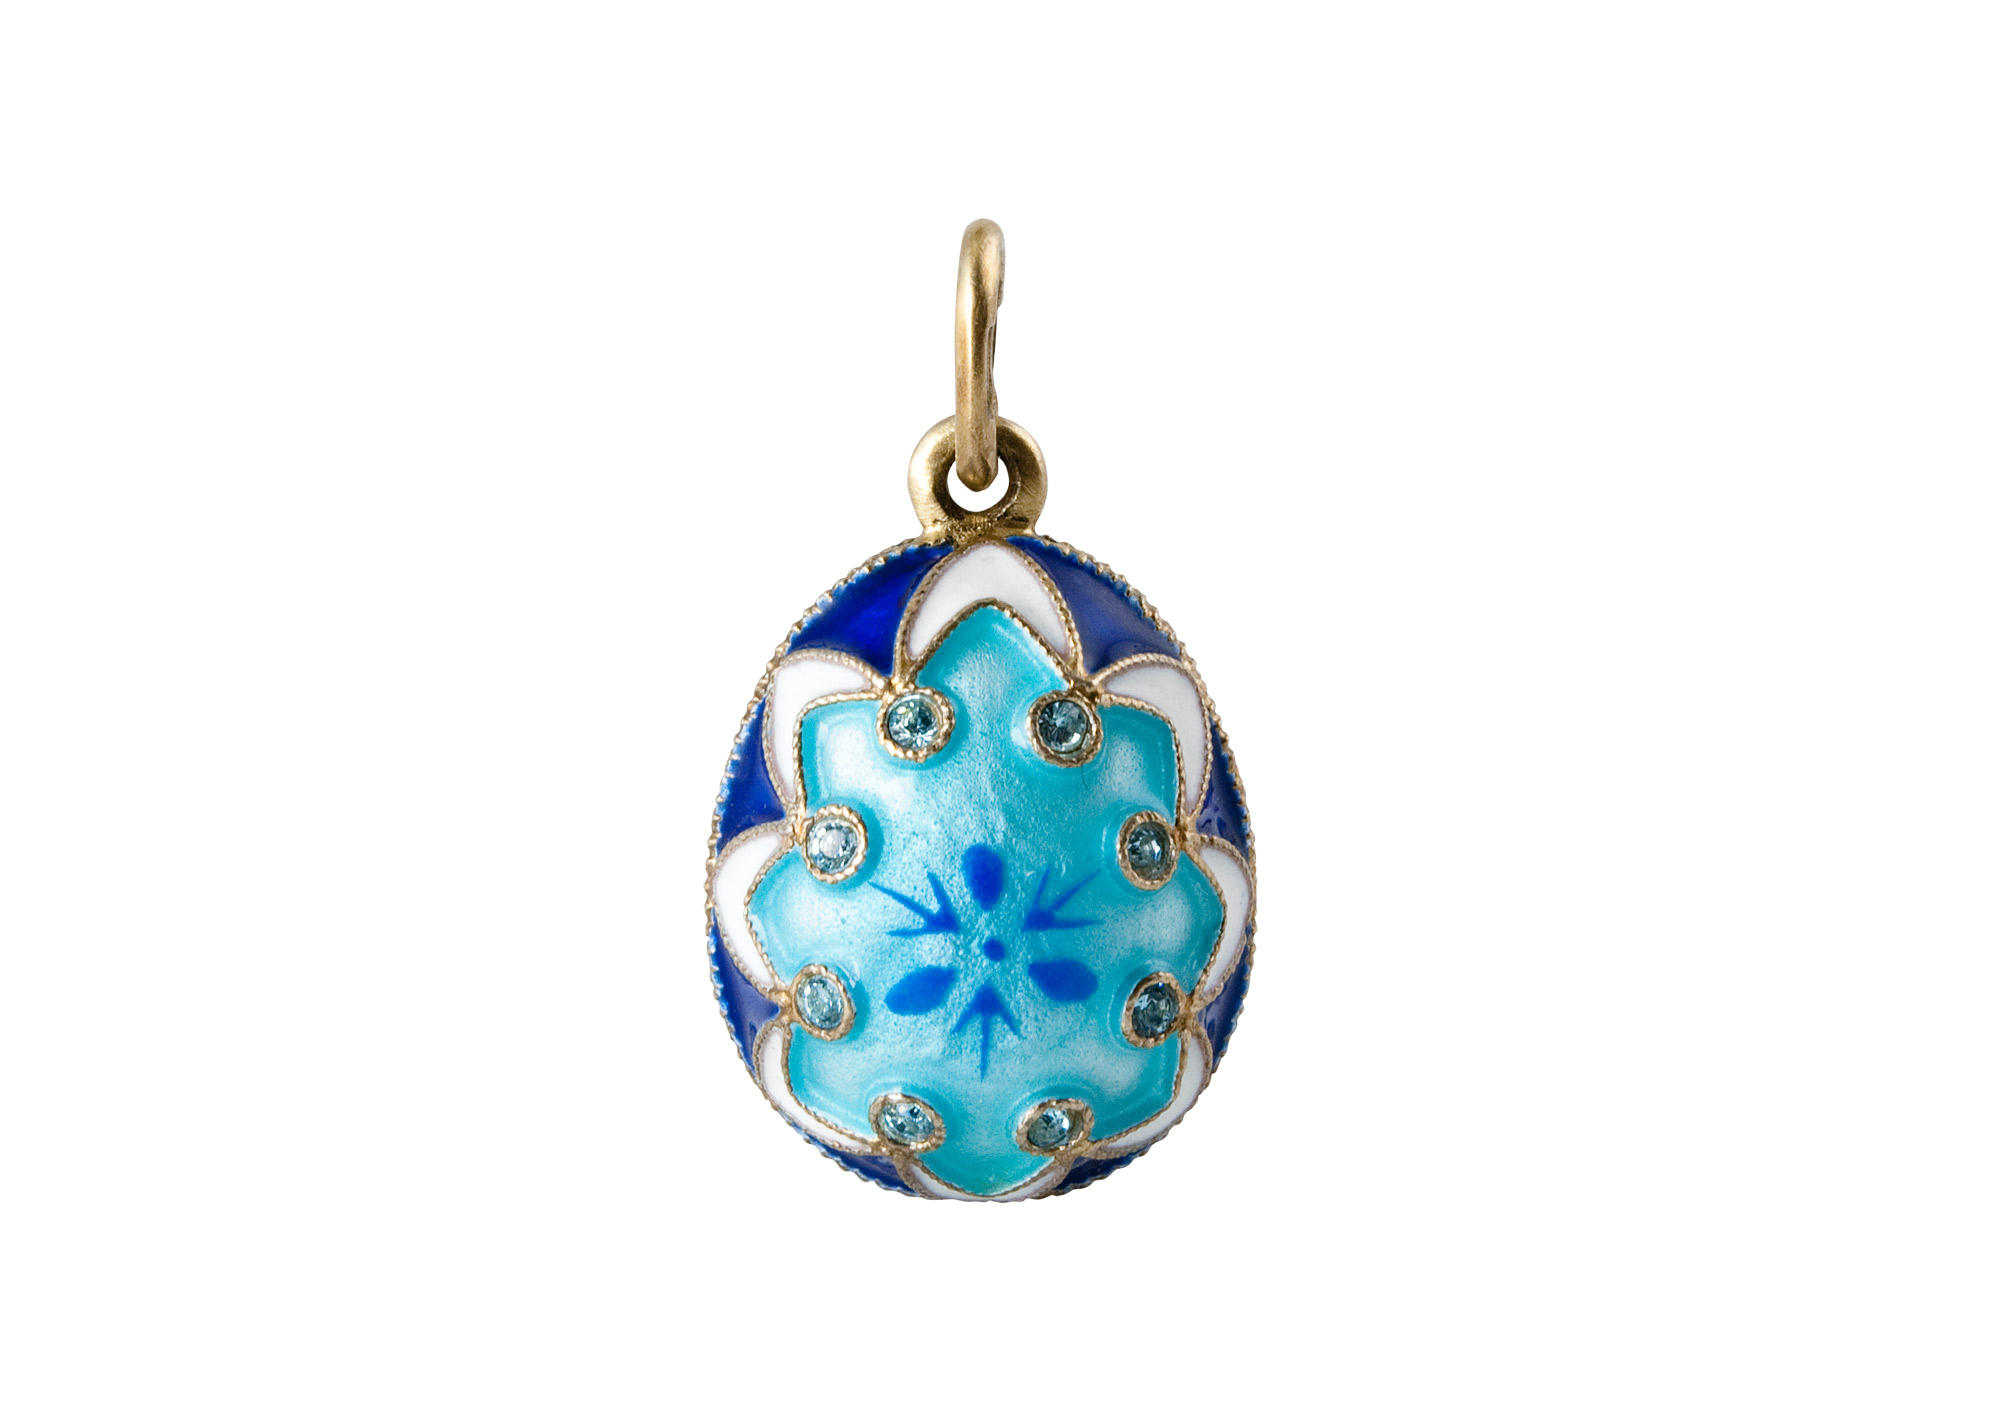 Buy Blue Painted Flower Egg Pendant (Damaged) .75" at GoldenCockerel.com